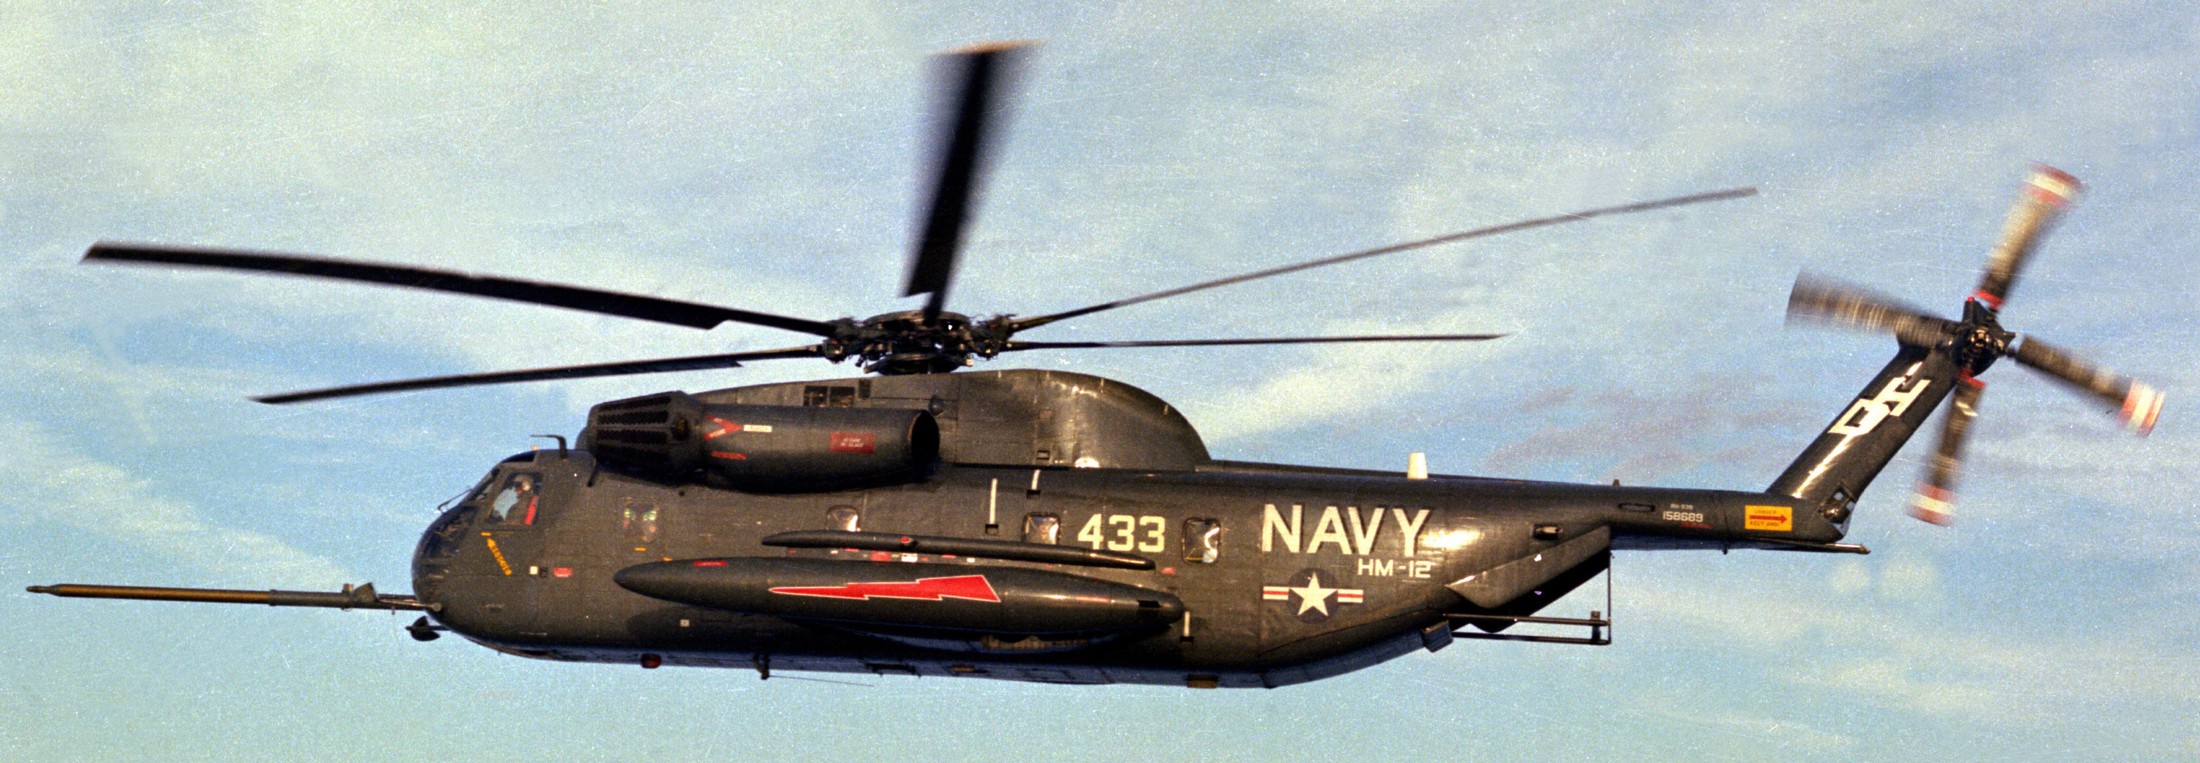 hm-12 sea dragons helicopter mine countermeasures squadron navy rh-53d sea stallion 12